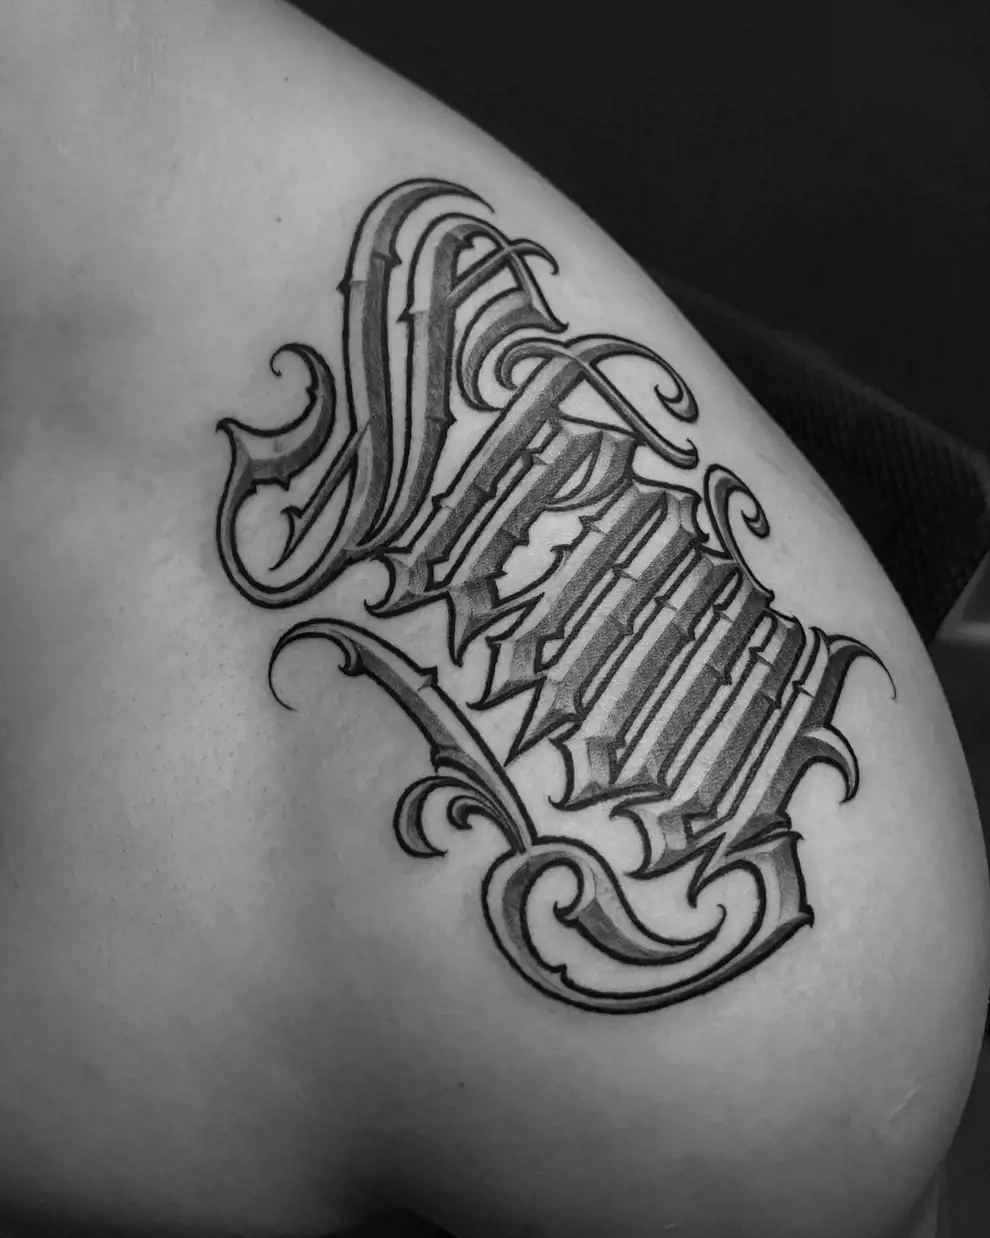 Tipos de letras para tatuajes: chicanas